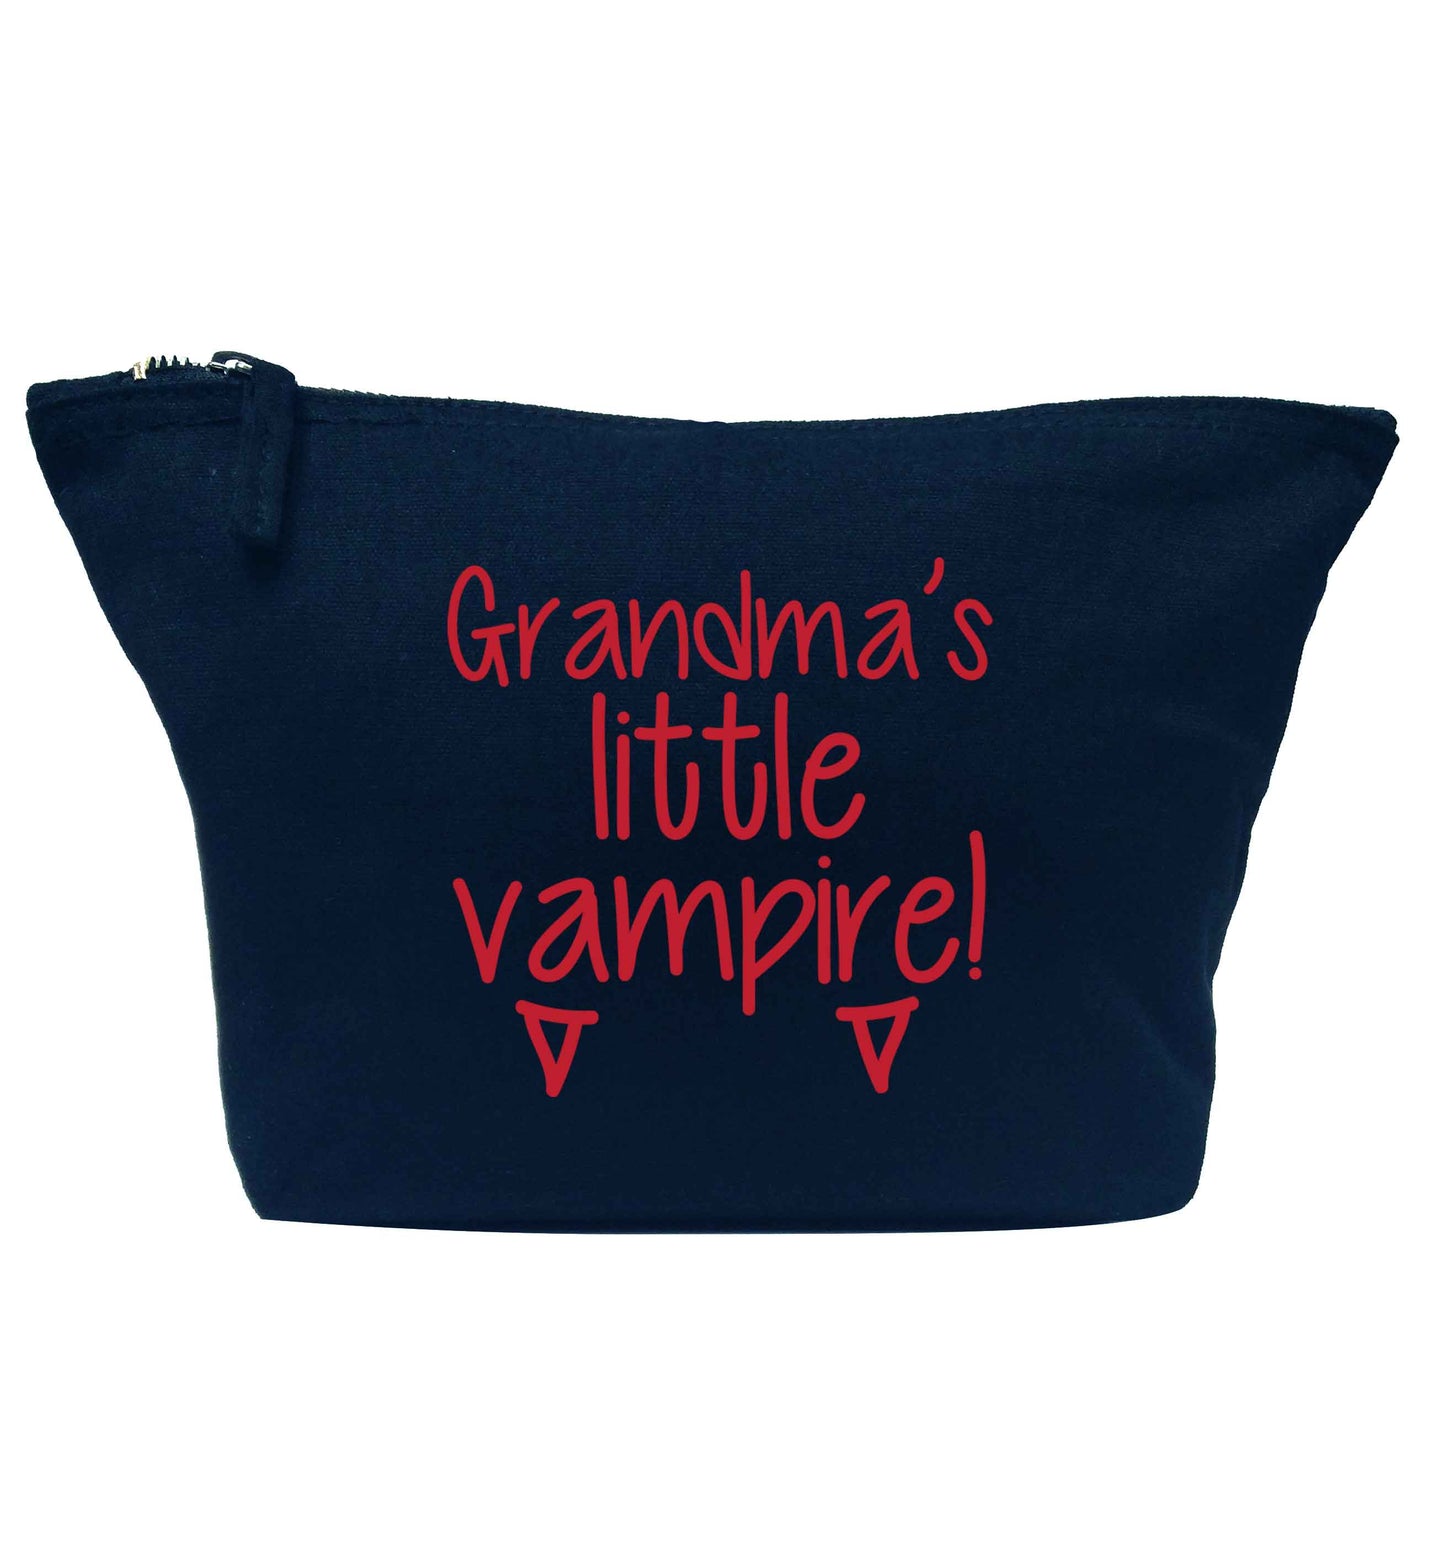 Grandma's little vampire navy makeup bag